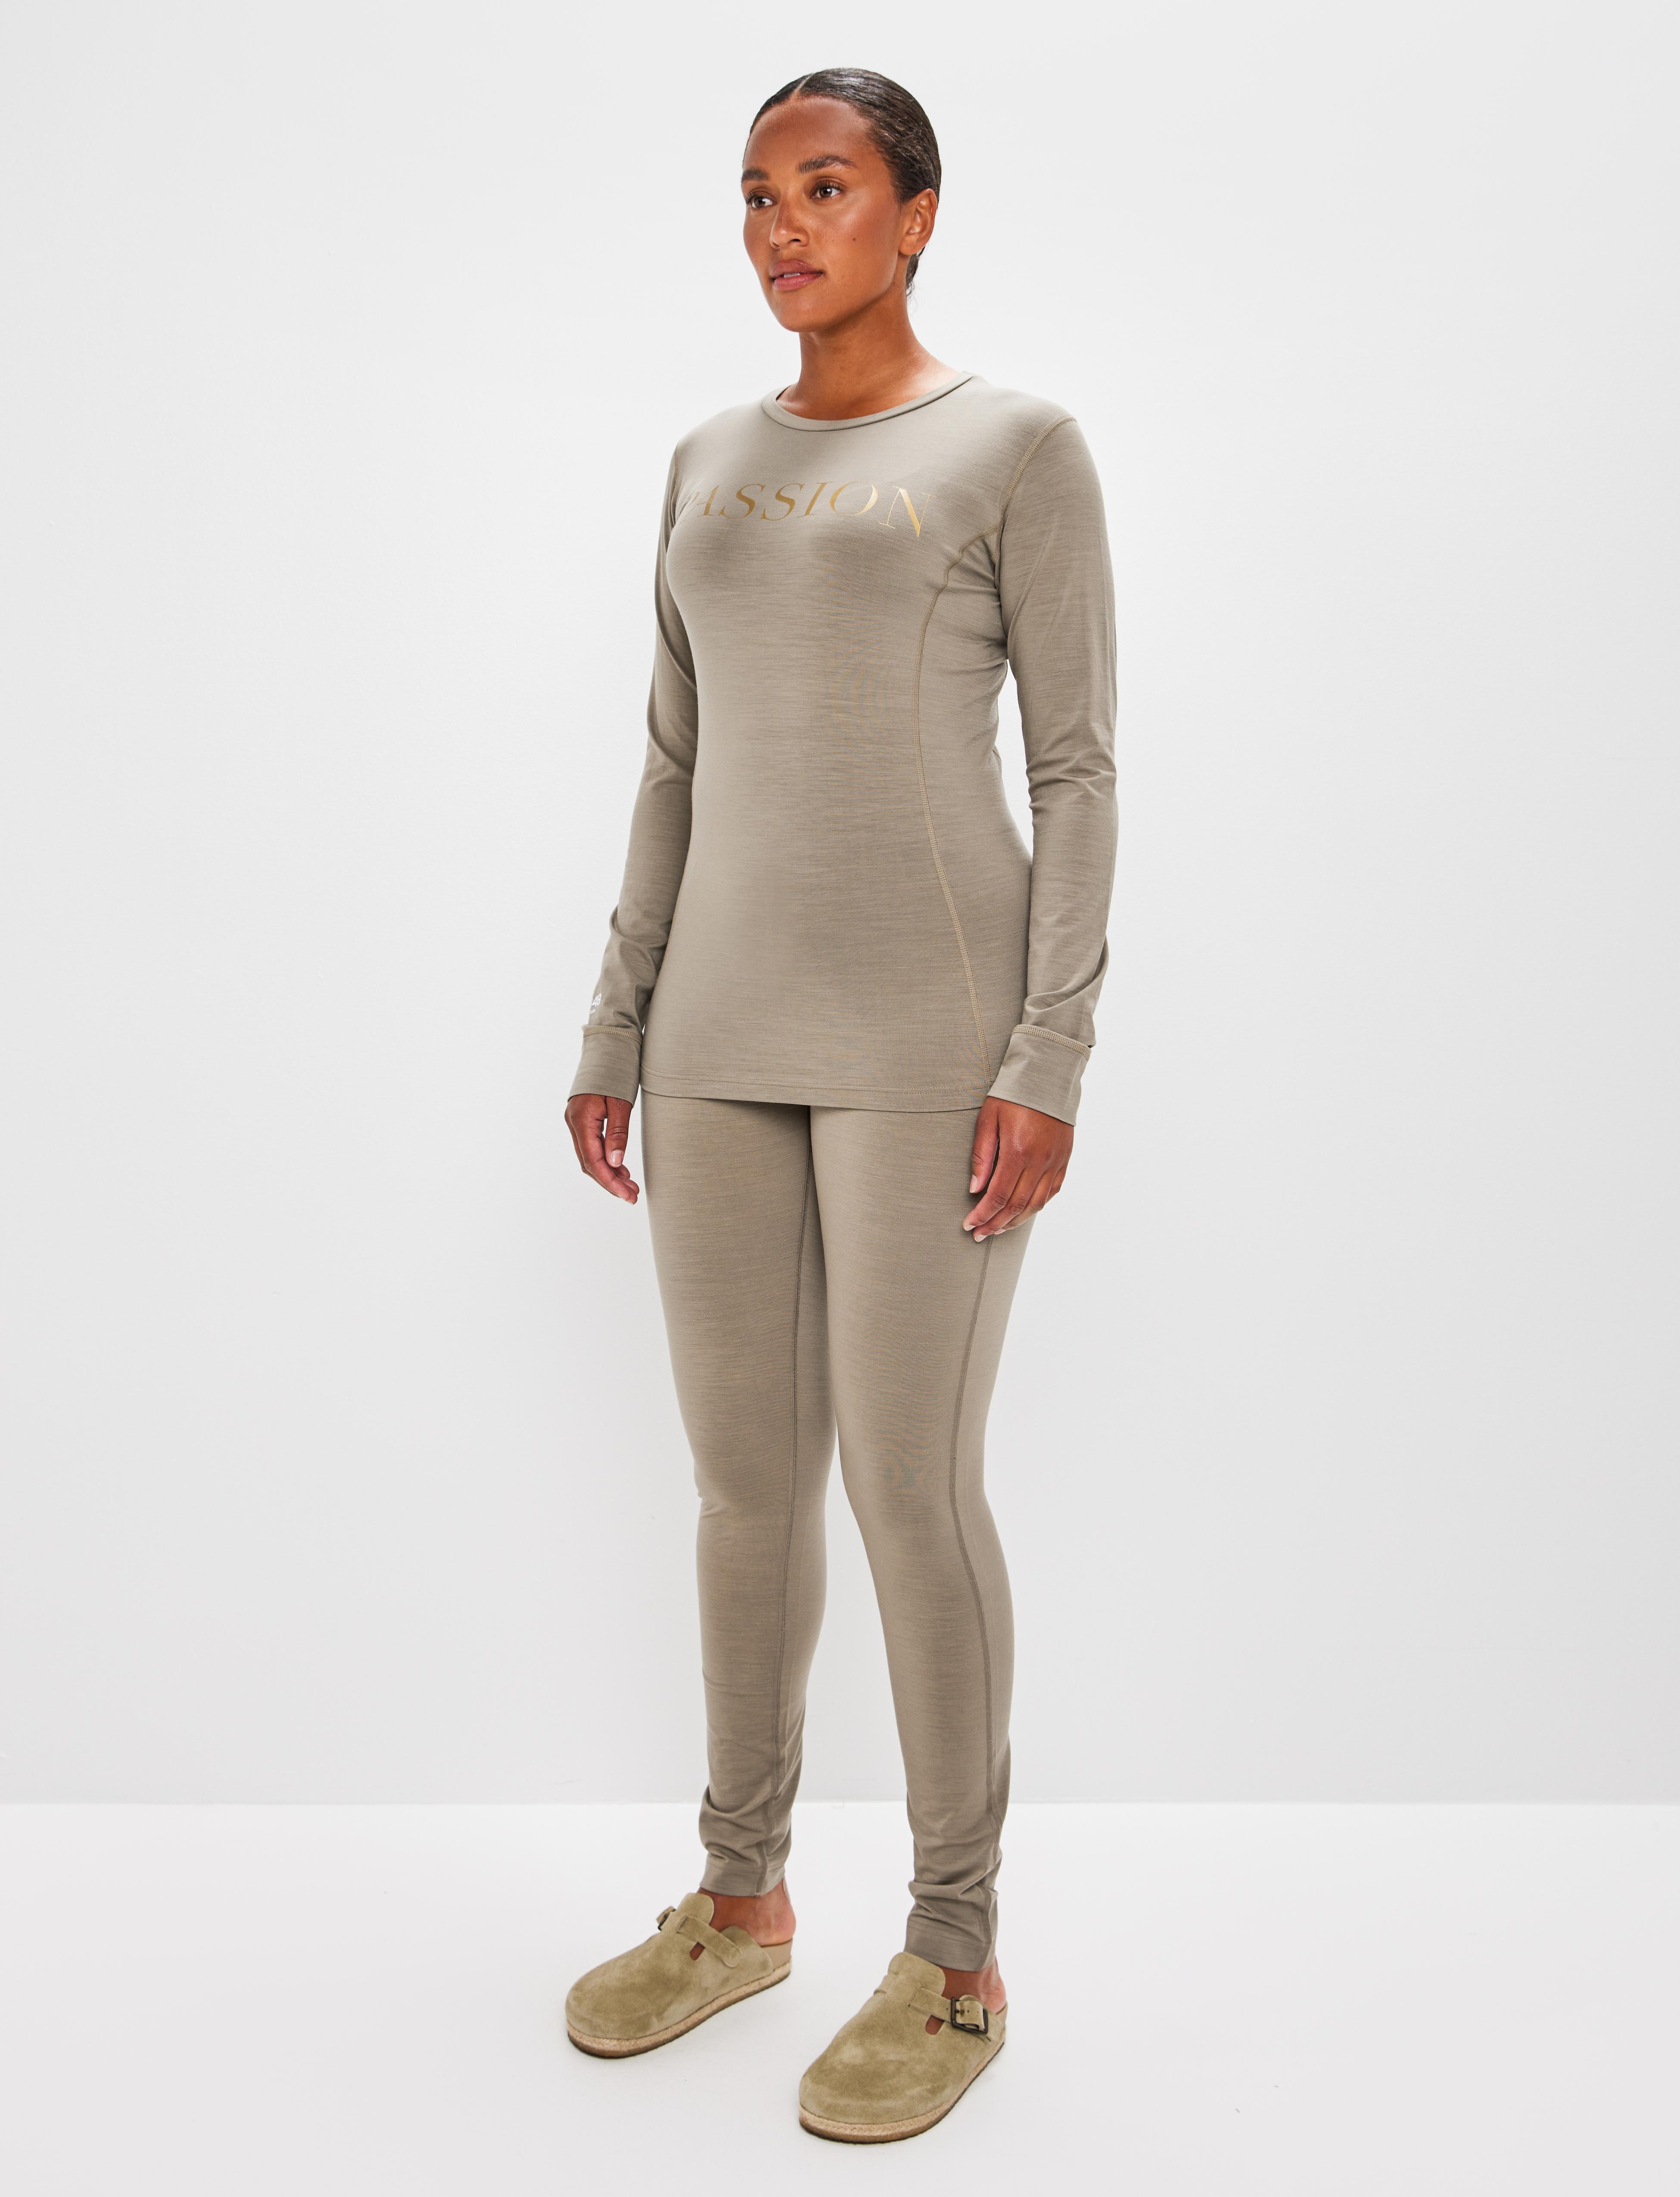 8848 merino wool women\'s Shop - Altitude underwear online